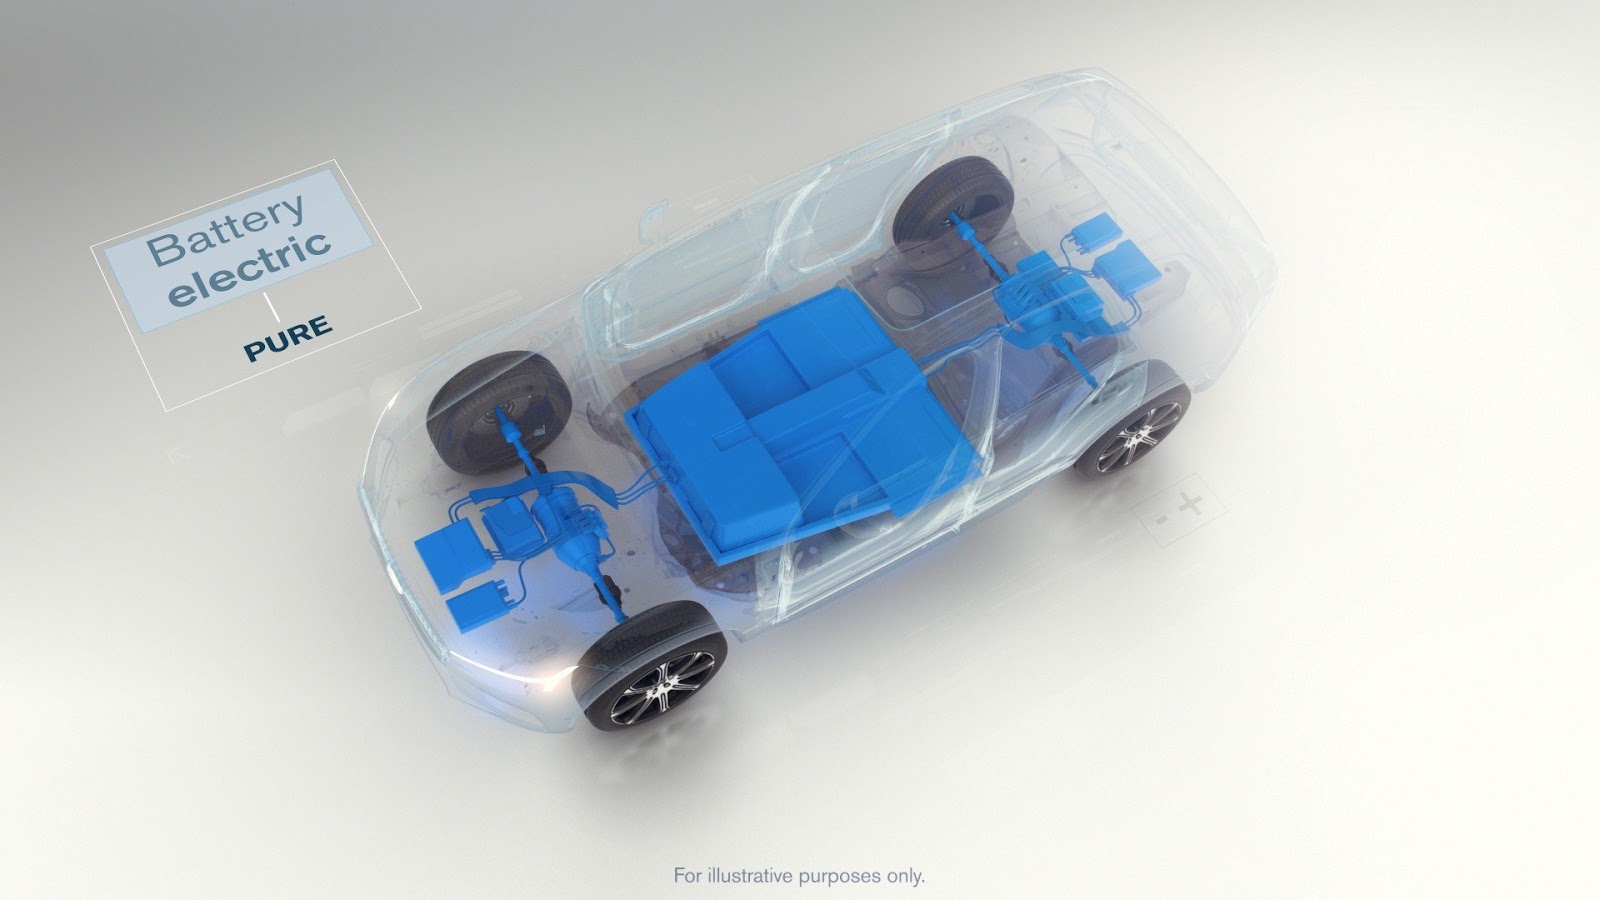 VOLVO BATTERY2BELECTRIC PURE Από το 2019, όλα τα Volvo θα έχουν ηλεκτροκινητήρα